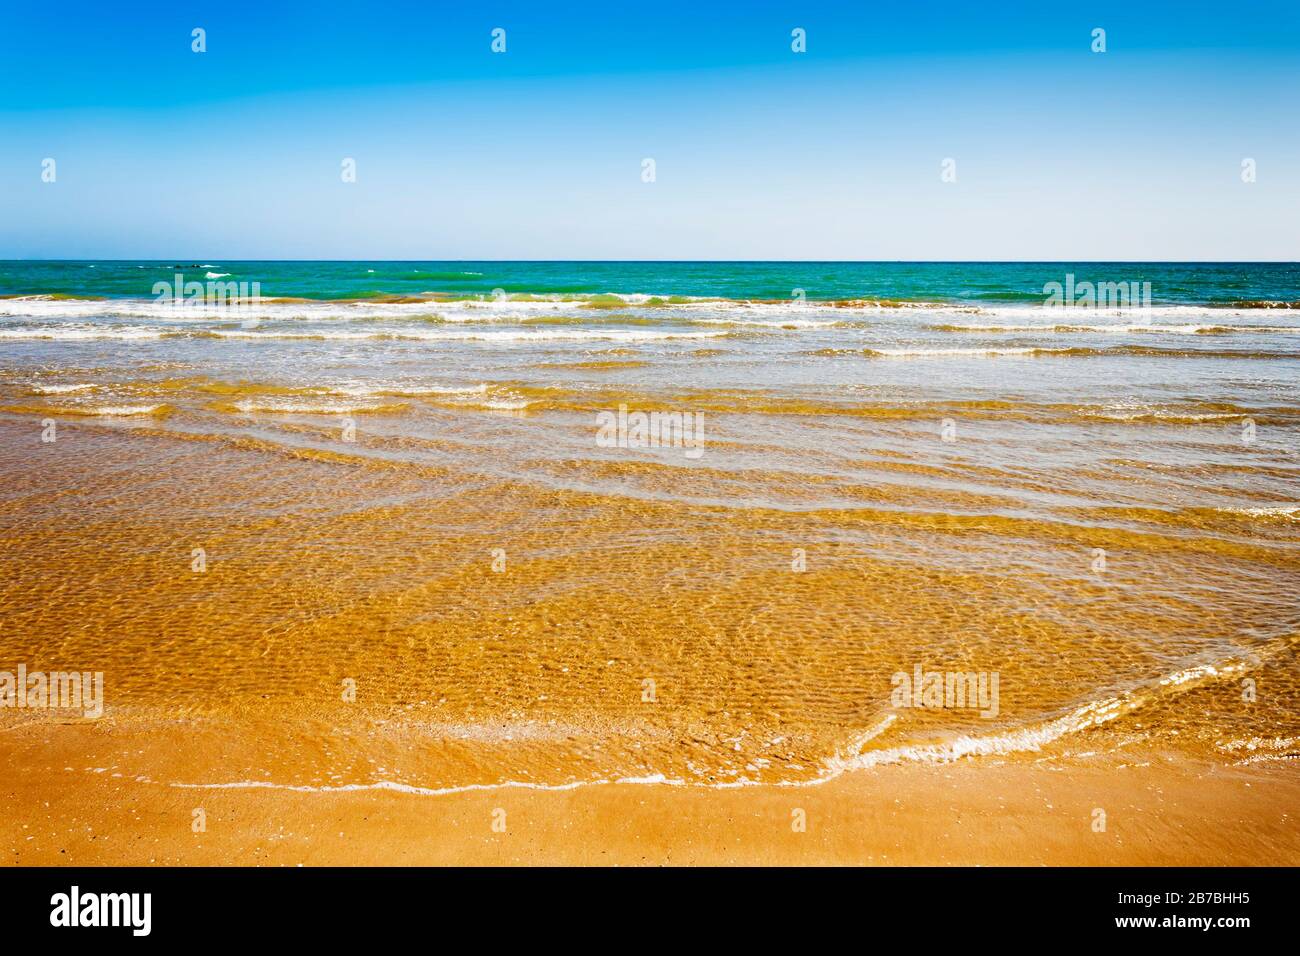 Clean water sandy beach summer background. Summertime ocean backdrop Stock Photo